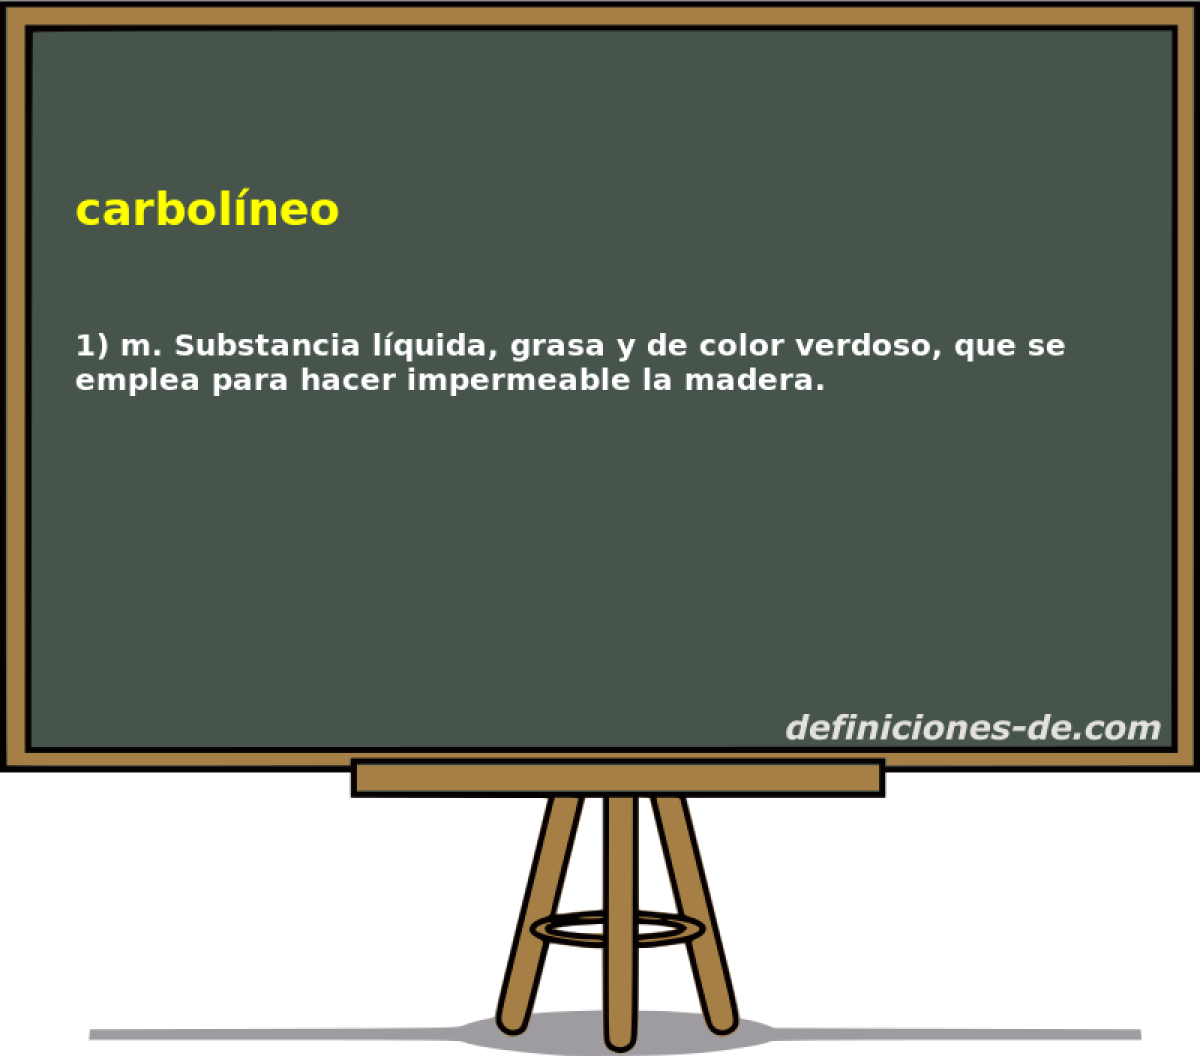 carbolneo 